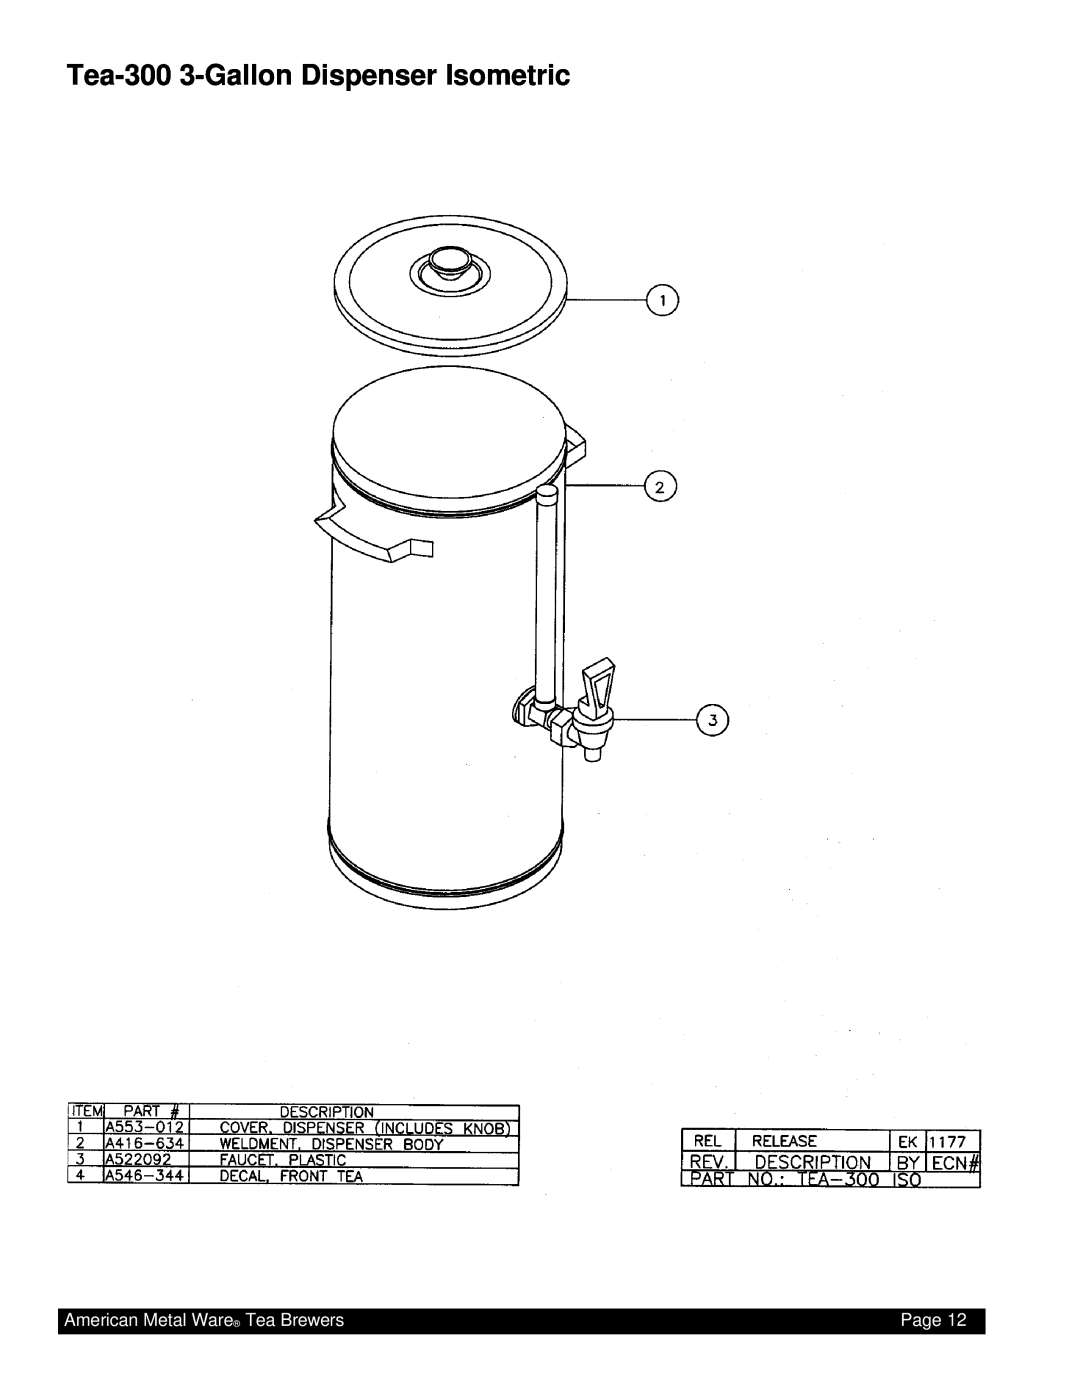 Grindmaster TEA-300 instruction manual Tea-300 3-Gallon Dispenser Isometric, American Metal Ware Tea Brewers, Page 